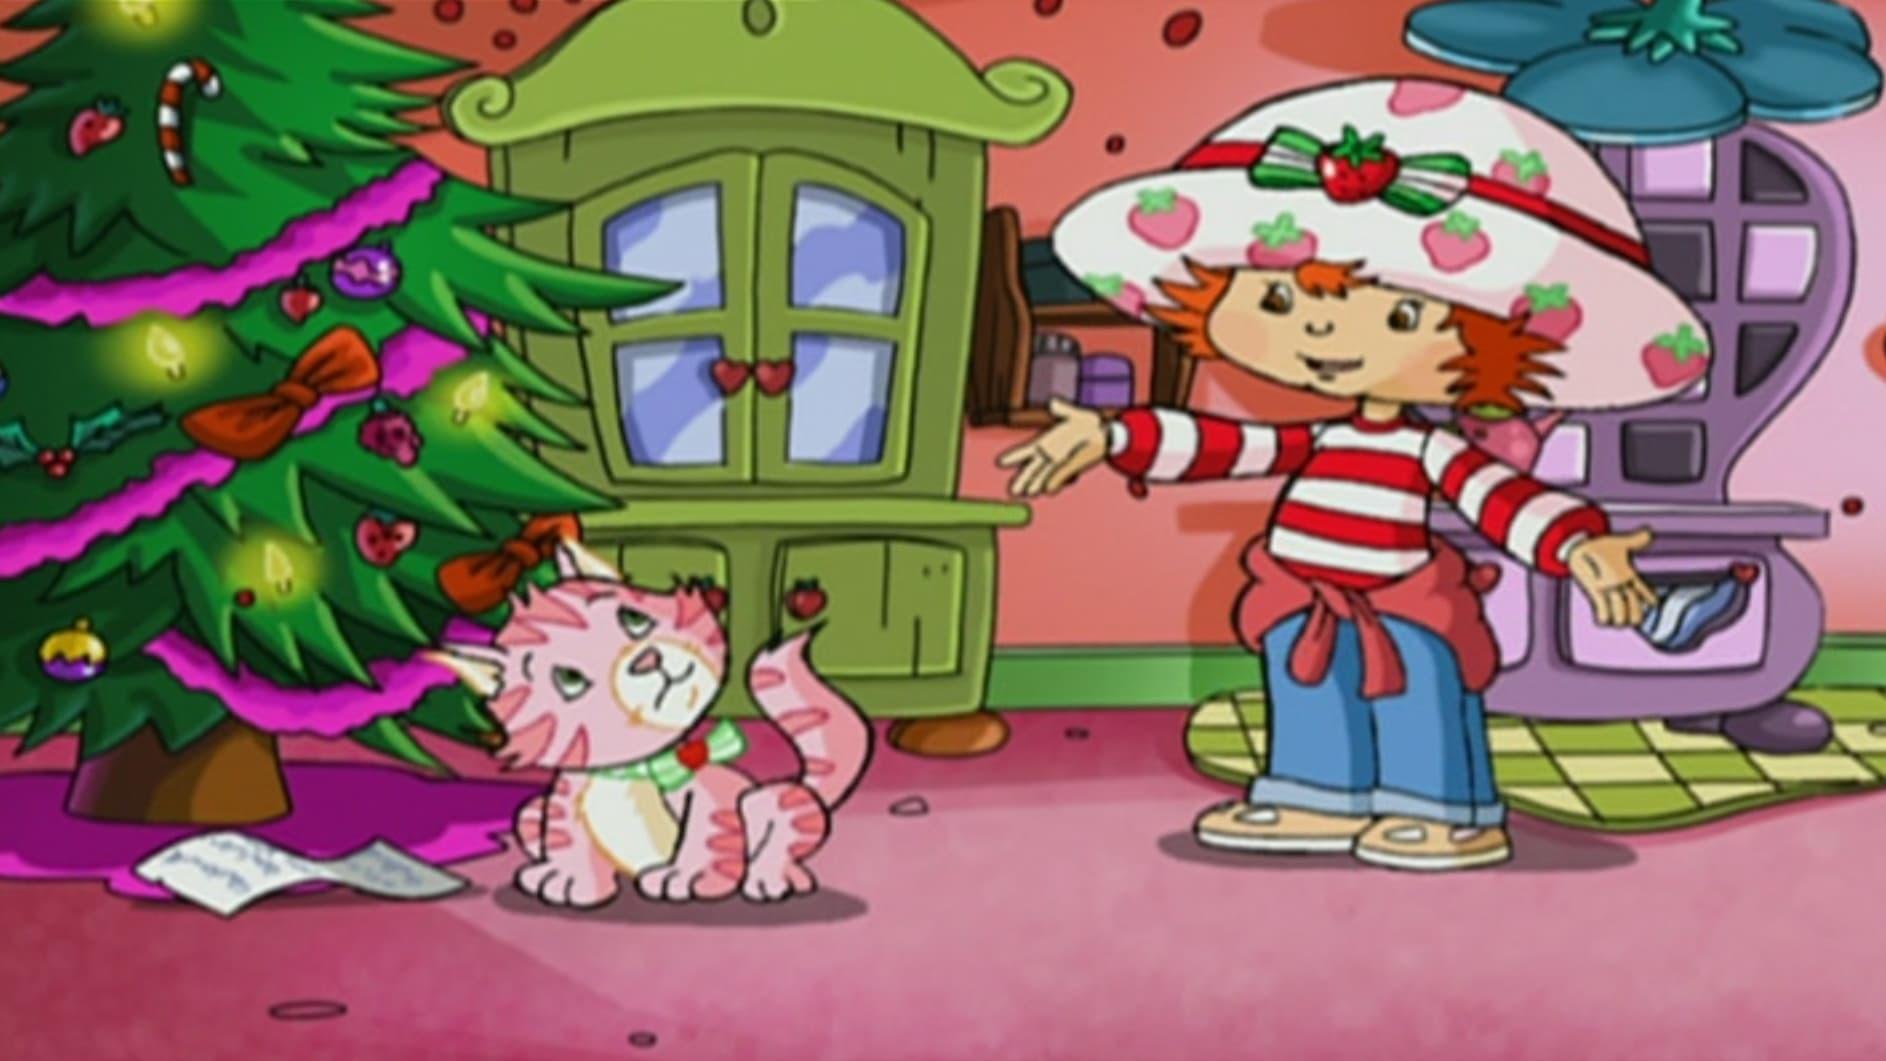 Strawberry Shortcake: Berry, Merry Christmas backdrop